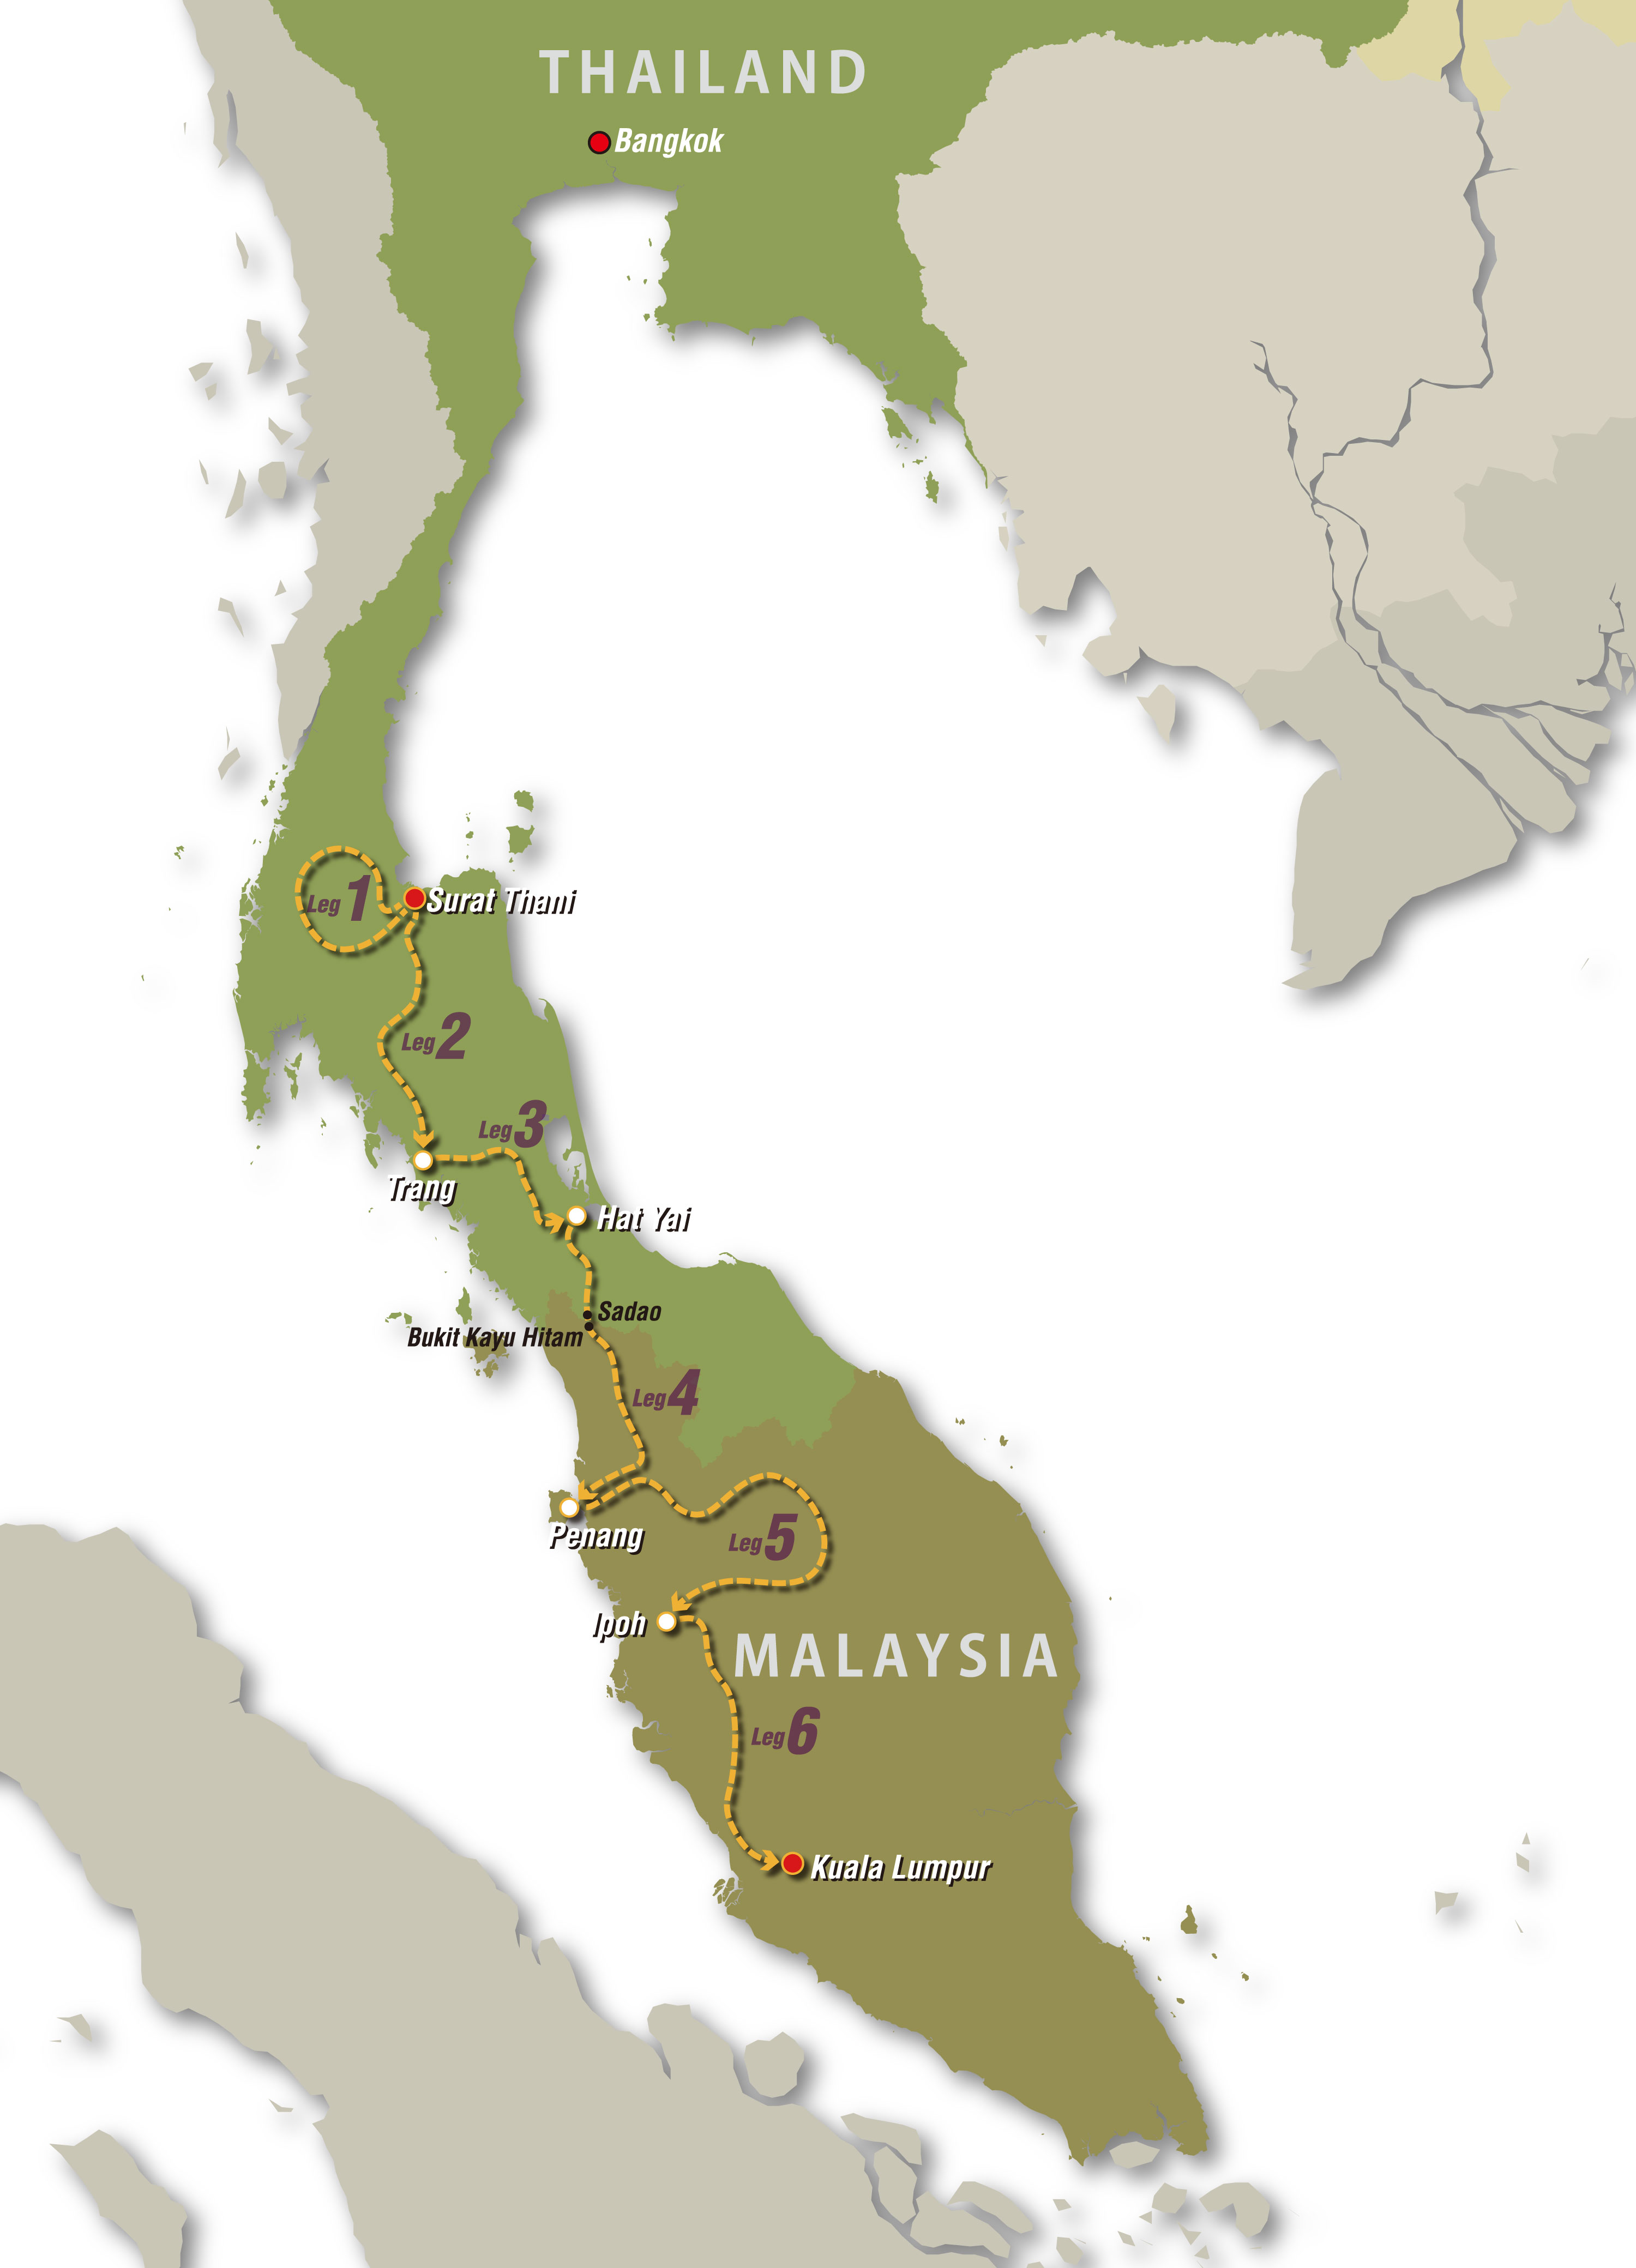 THAILANDtoMALAYSIA